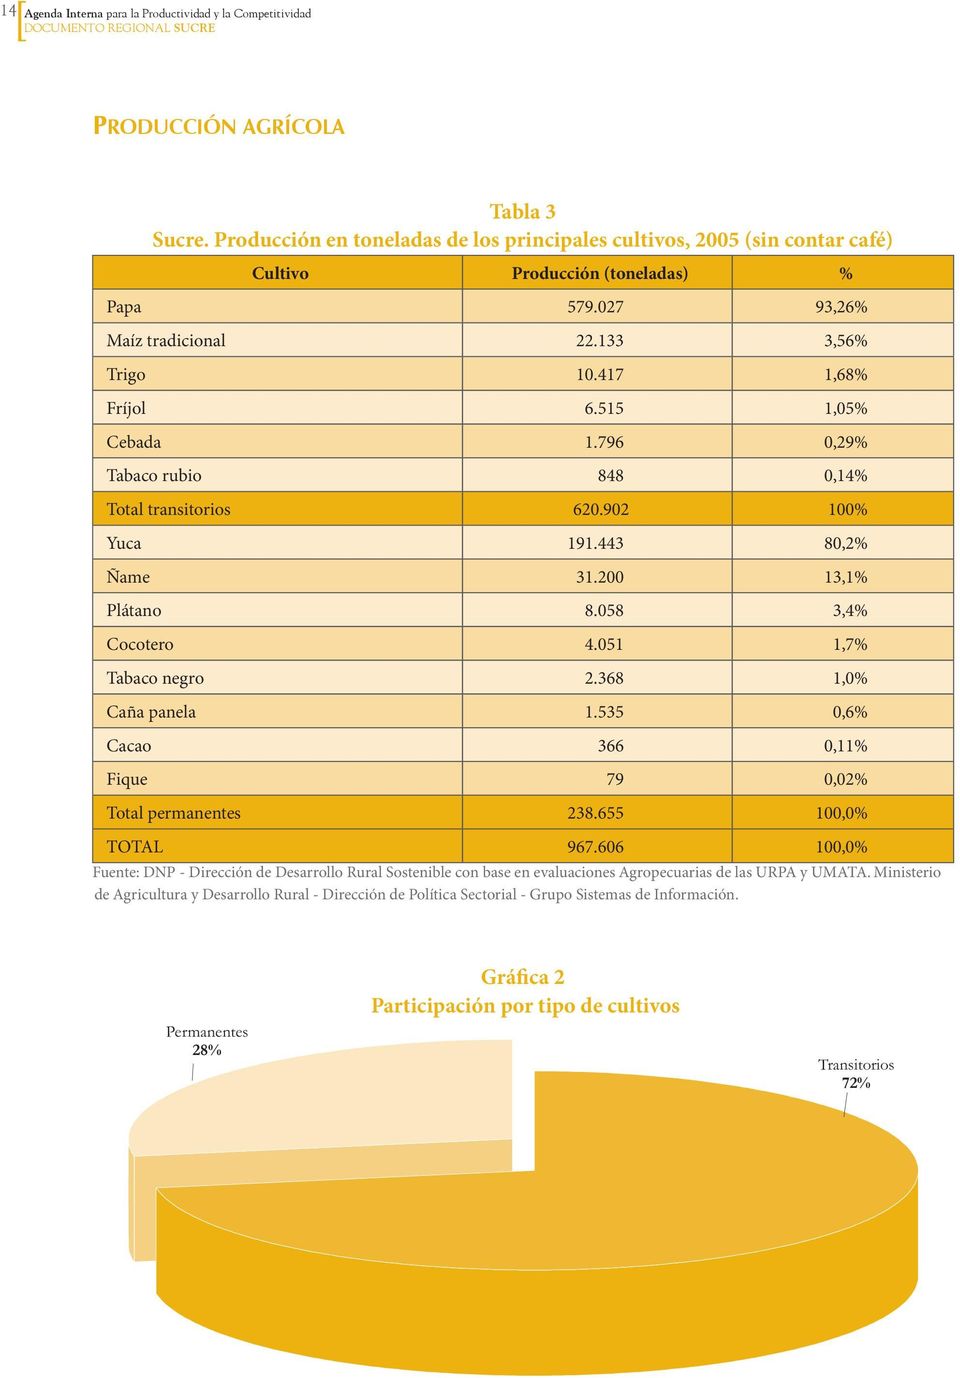 515 1,05% Cebada 1.796 0,29% Tabaco rubio 848 0,14% Total transitorios 620.902 100% Yuca 191.443 80,2% Ñame 31.200 13,1% Plátano 8.058 3,4% Cocotero 4.051 1,7% Tabaco negro 2.368 1,0% Caña panela 1.